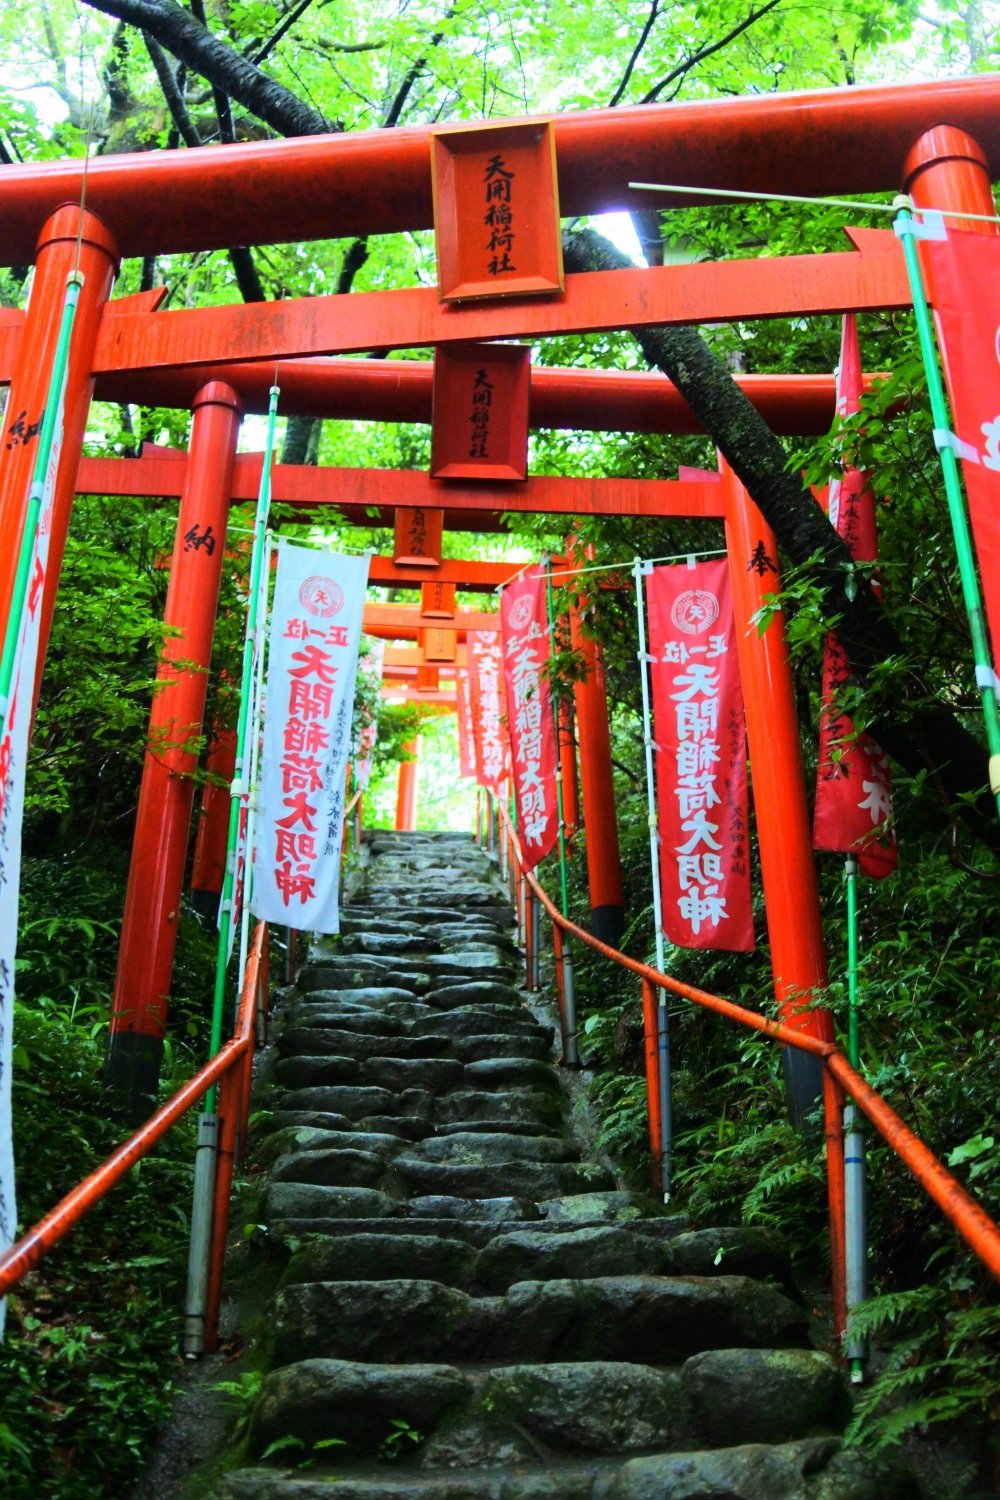 The torii towards the main building